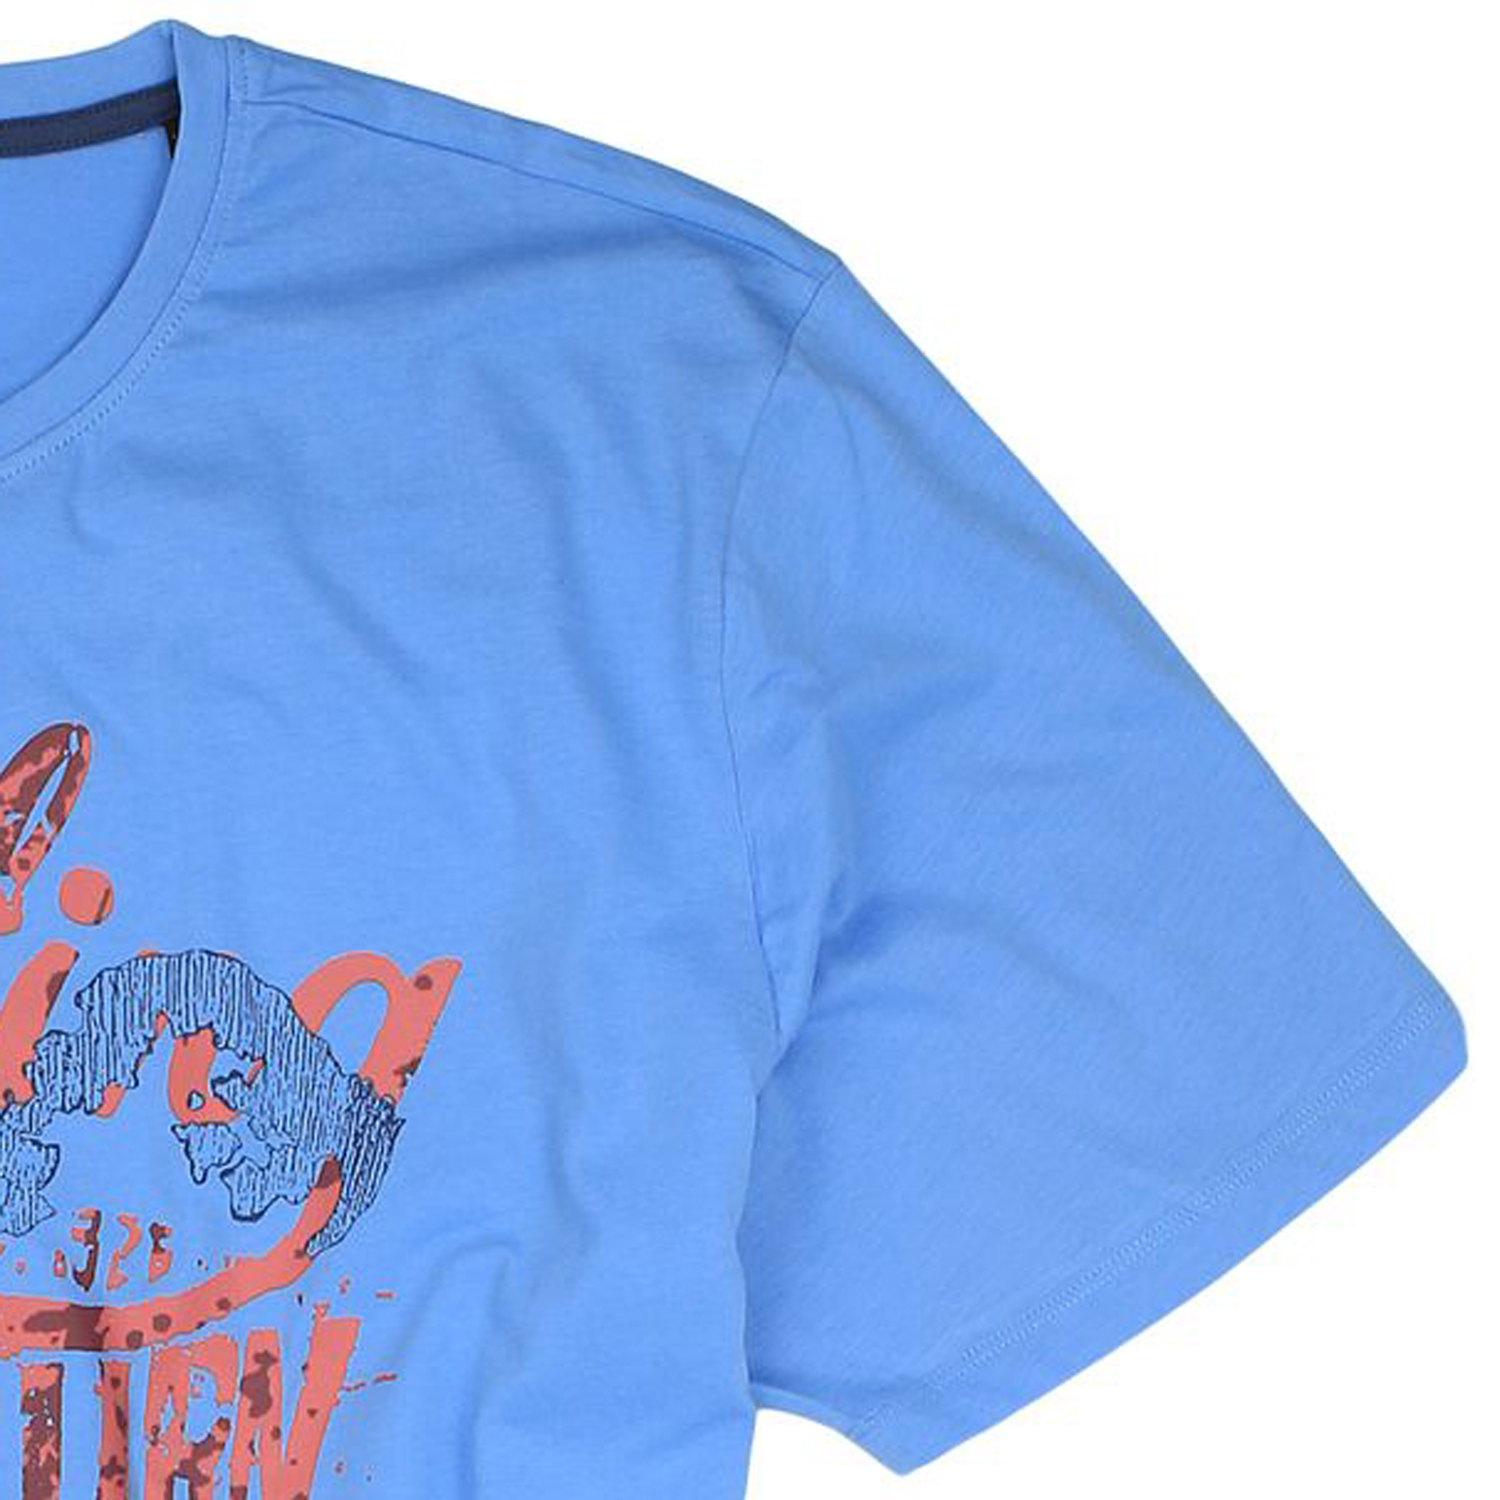 T-shirt de Kitaro en grandes tailles jusqu'au 8XL / bleu clair